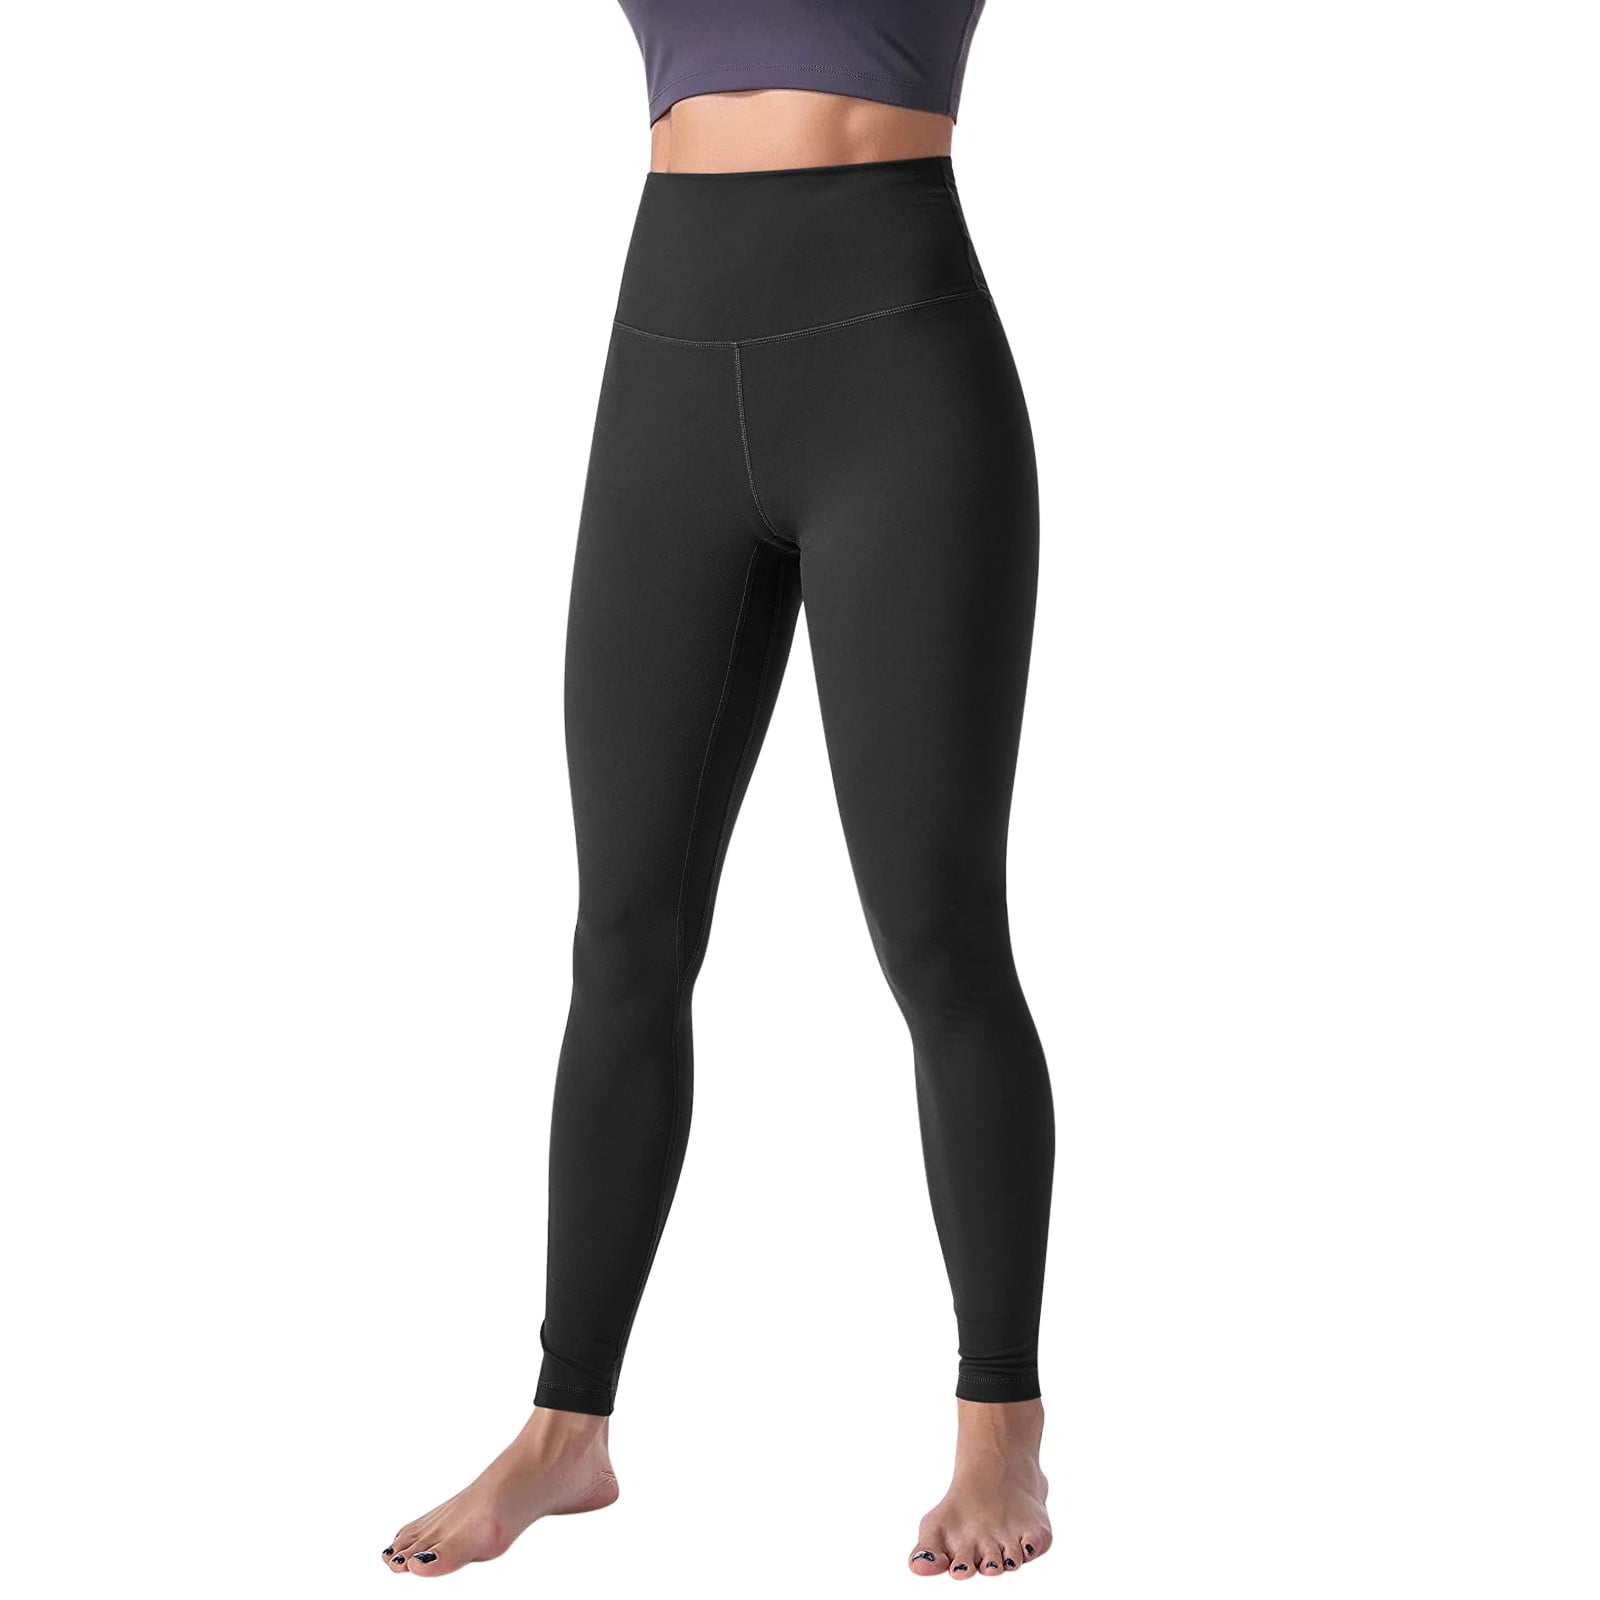 JDEFEG Plus Size Tall Yoga Pants For Women Leggings Pants Waist